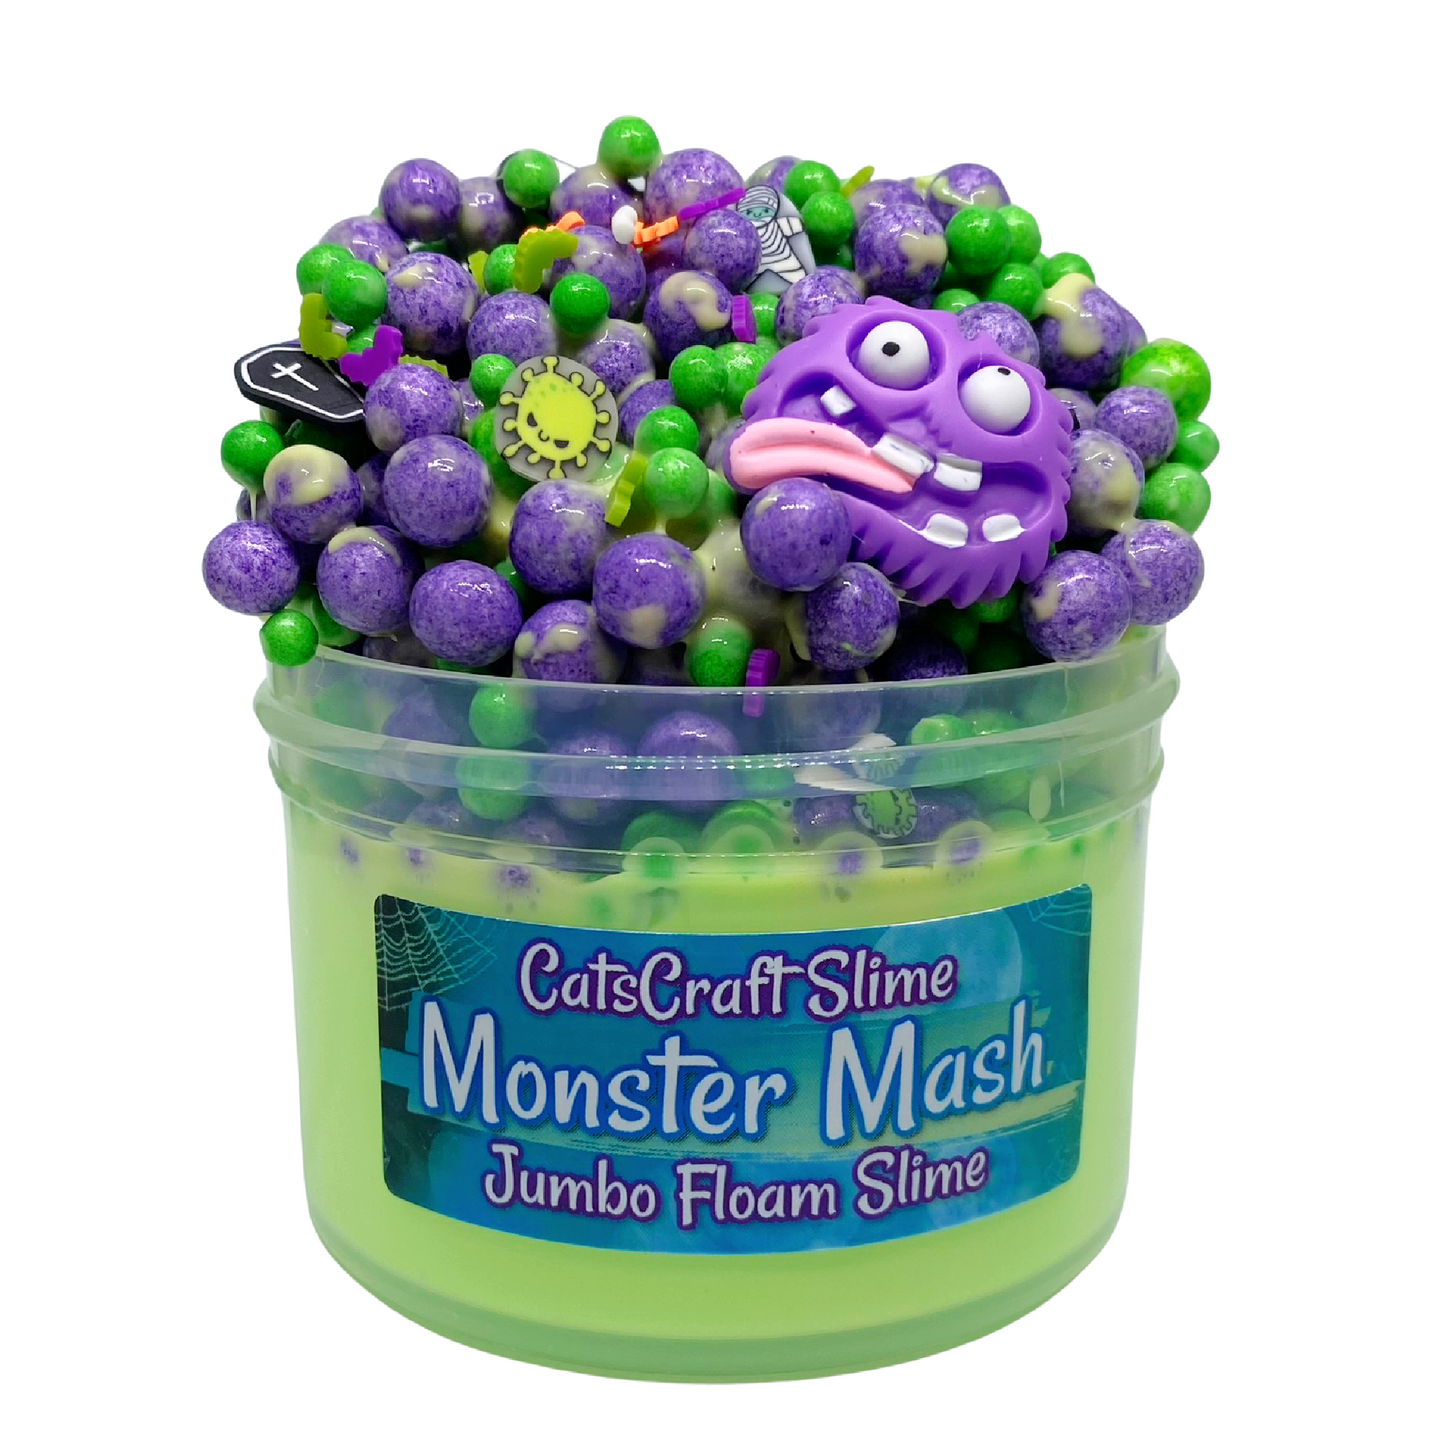 Jumbo Floam Slime "Monster Mash" SCENTED crunchy ASMR foam beads Halloween slime with charm